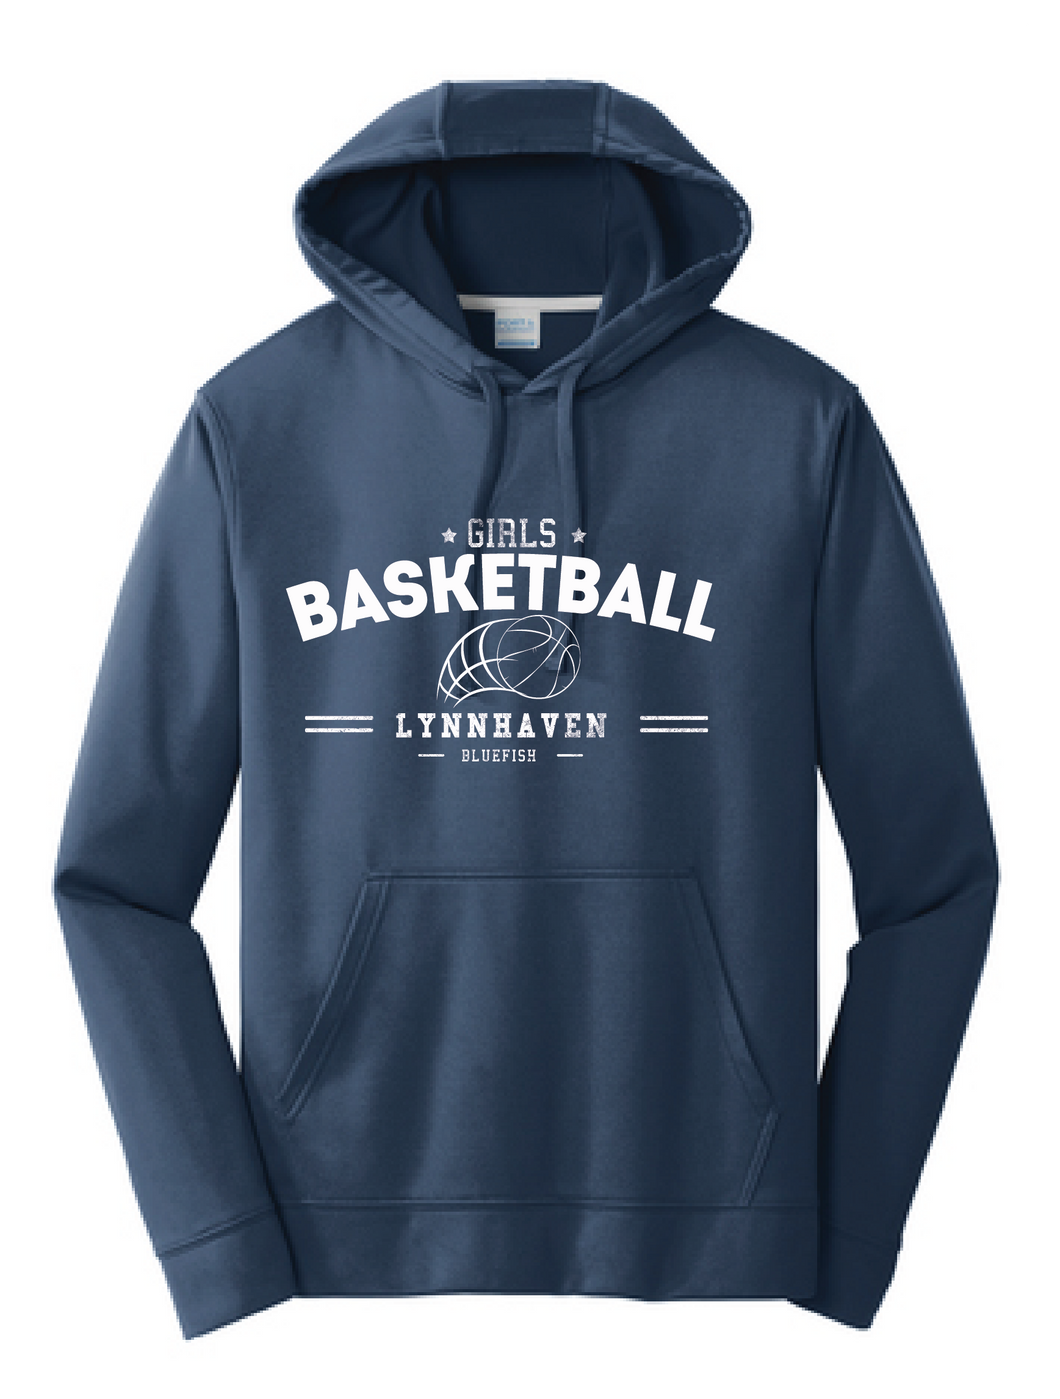 Performance Fleece Sweatshirt / Navy Blue / Lynnhaven Basketball - Fidgety